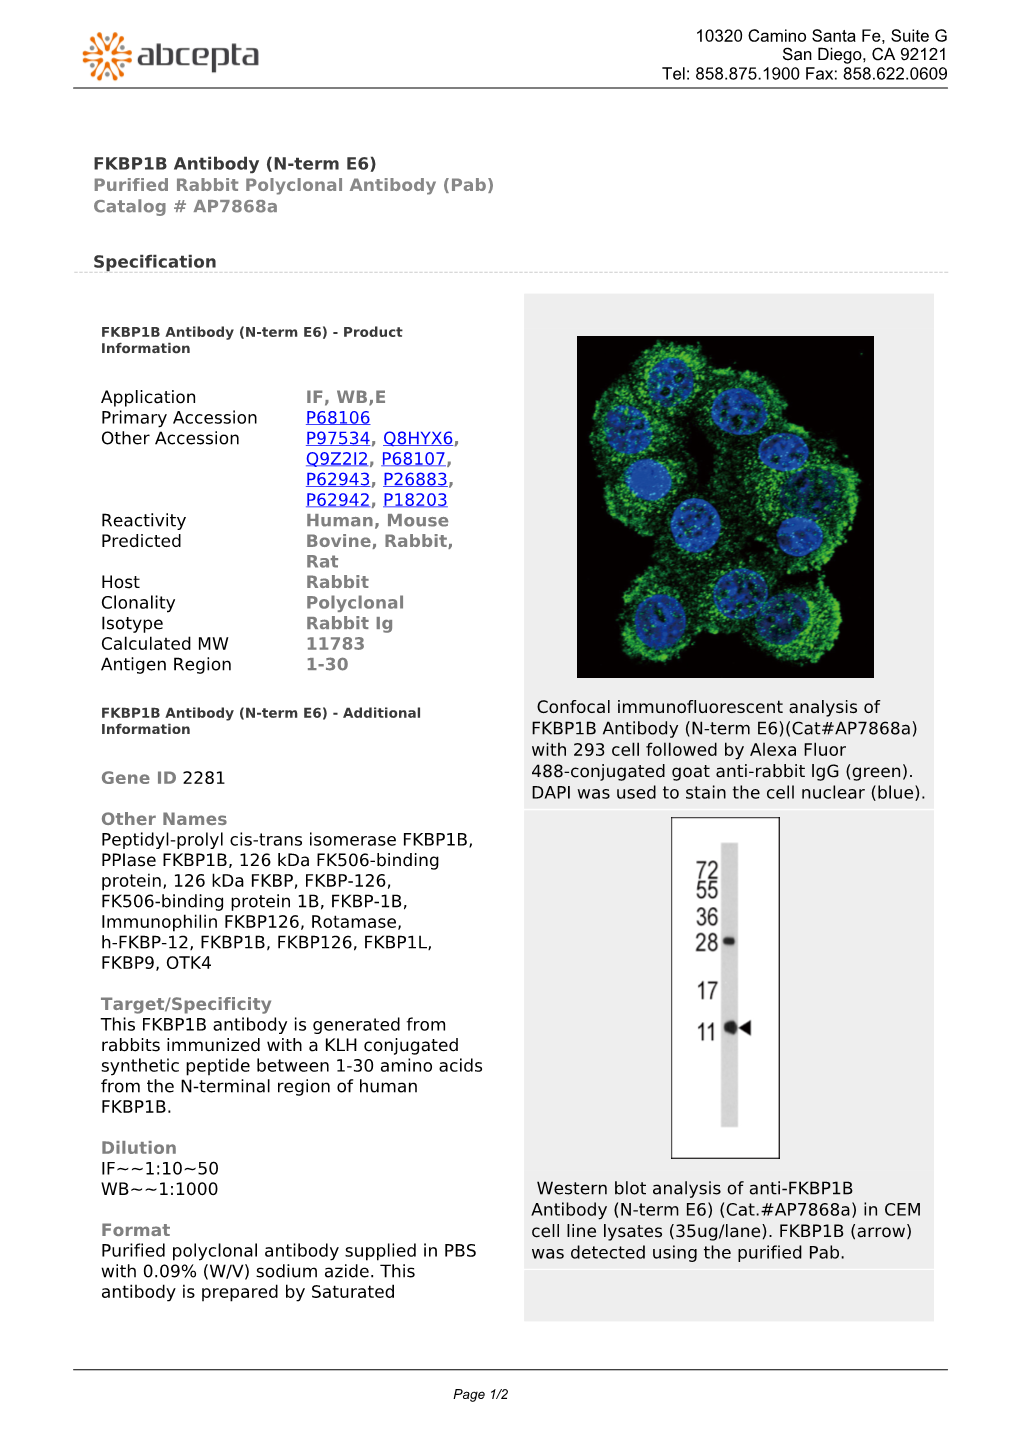 FKBP1B Antibody (N-Term E6) Purified Rabbit Polyclonal Antibody (Pab) Catalog # Ap7868a